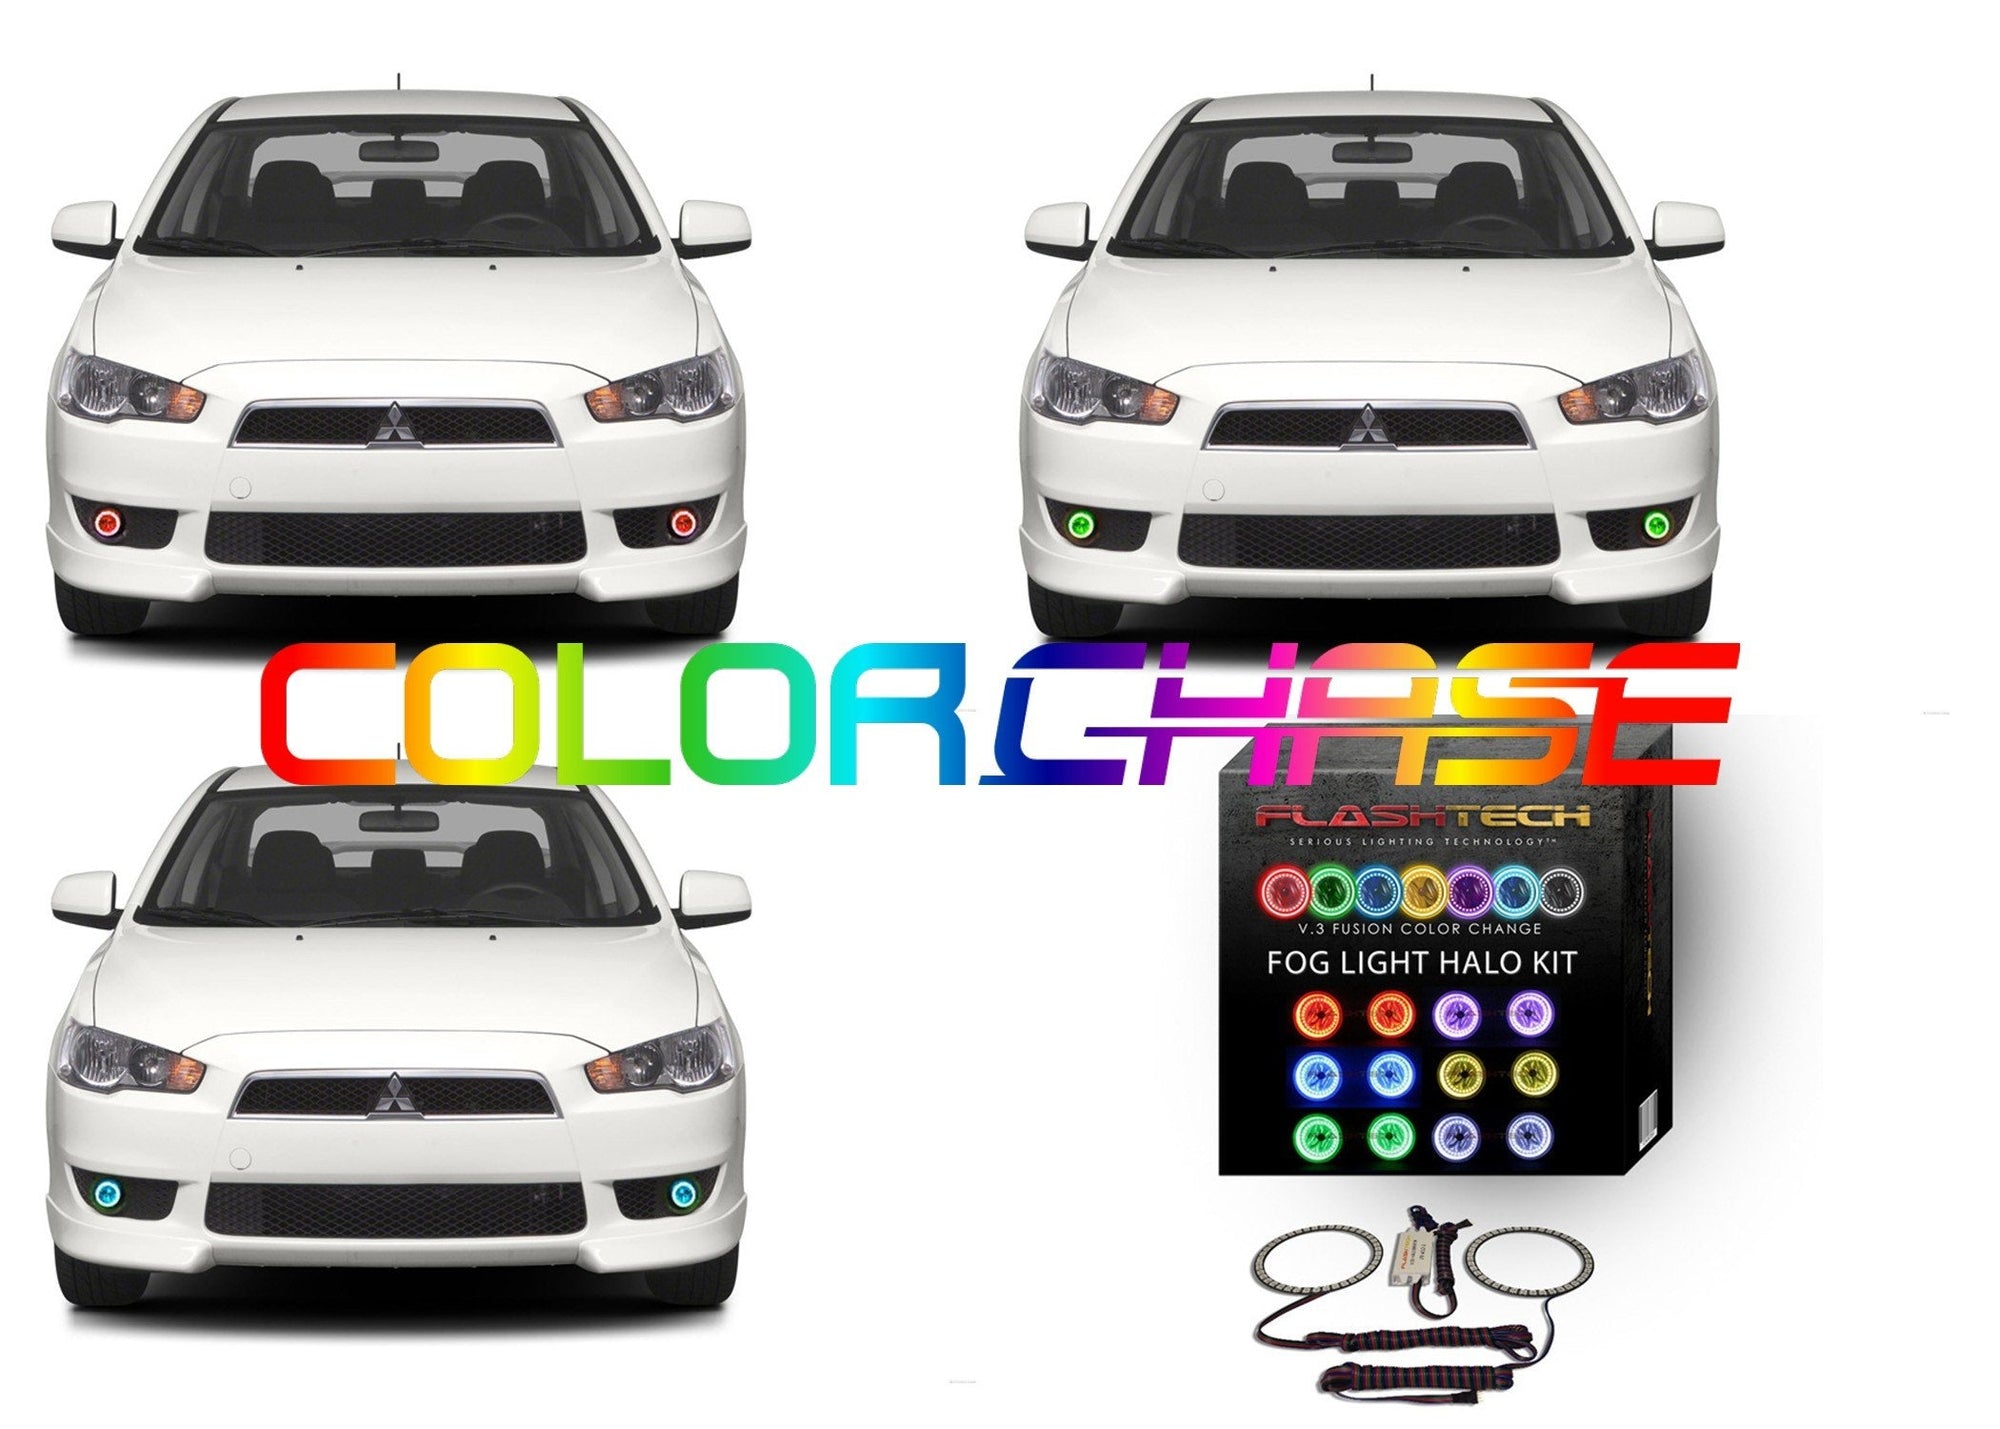 Mitsubishi-Lancer-2008, 2009, 2010, 2011, 2012, 2013, 2014, 2015, 2016-LED-Halo-Fog Lights-ColorChase-No Remote-MI-LA0814-CCF